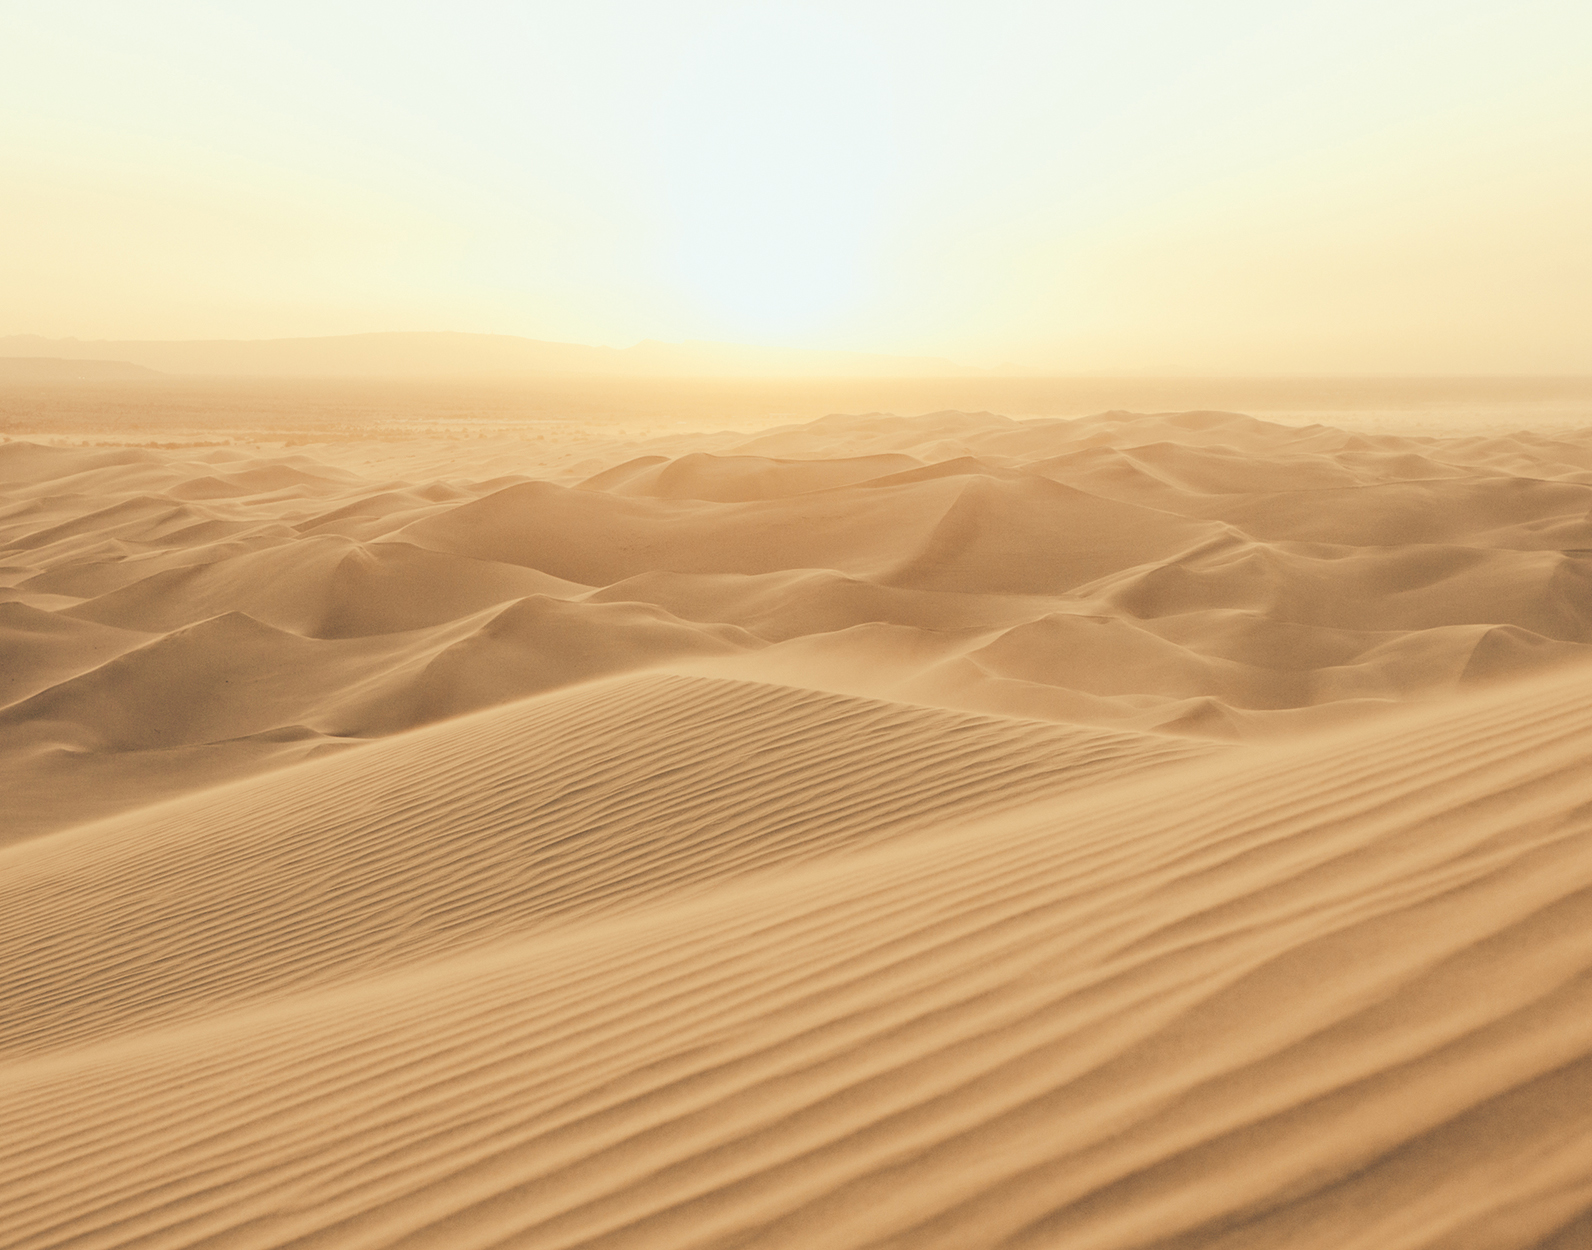 G78423 Stampa Dgt Tnt Atmosphere Sand Dune Mural